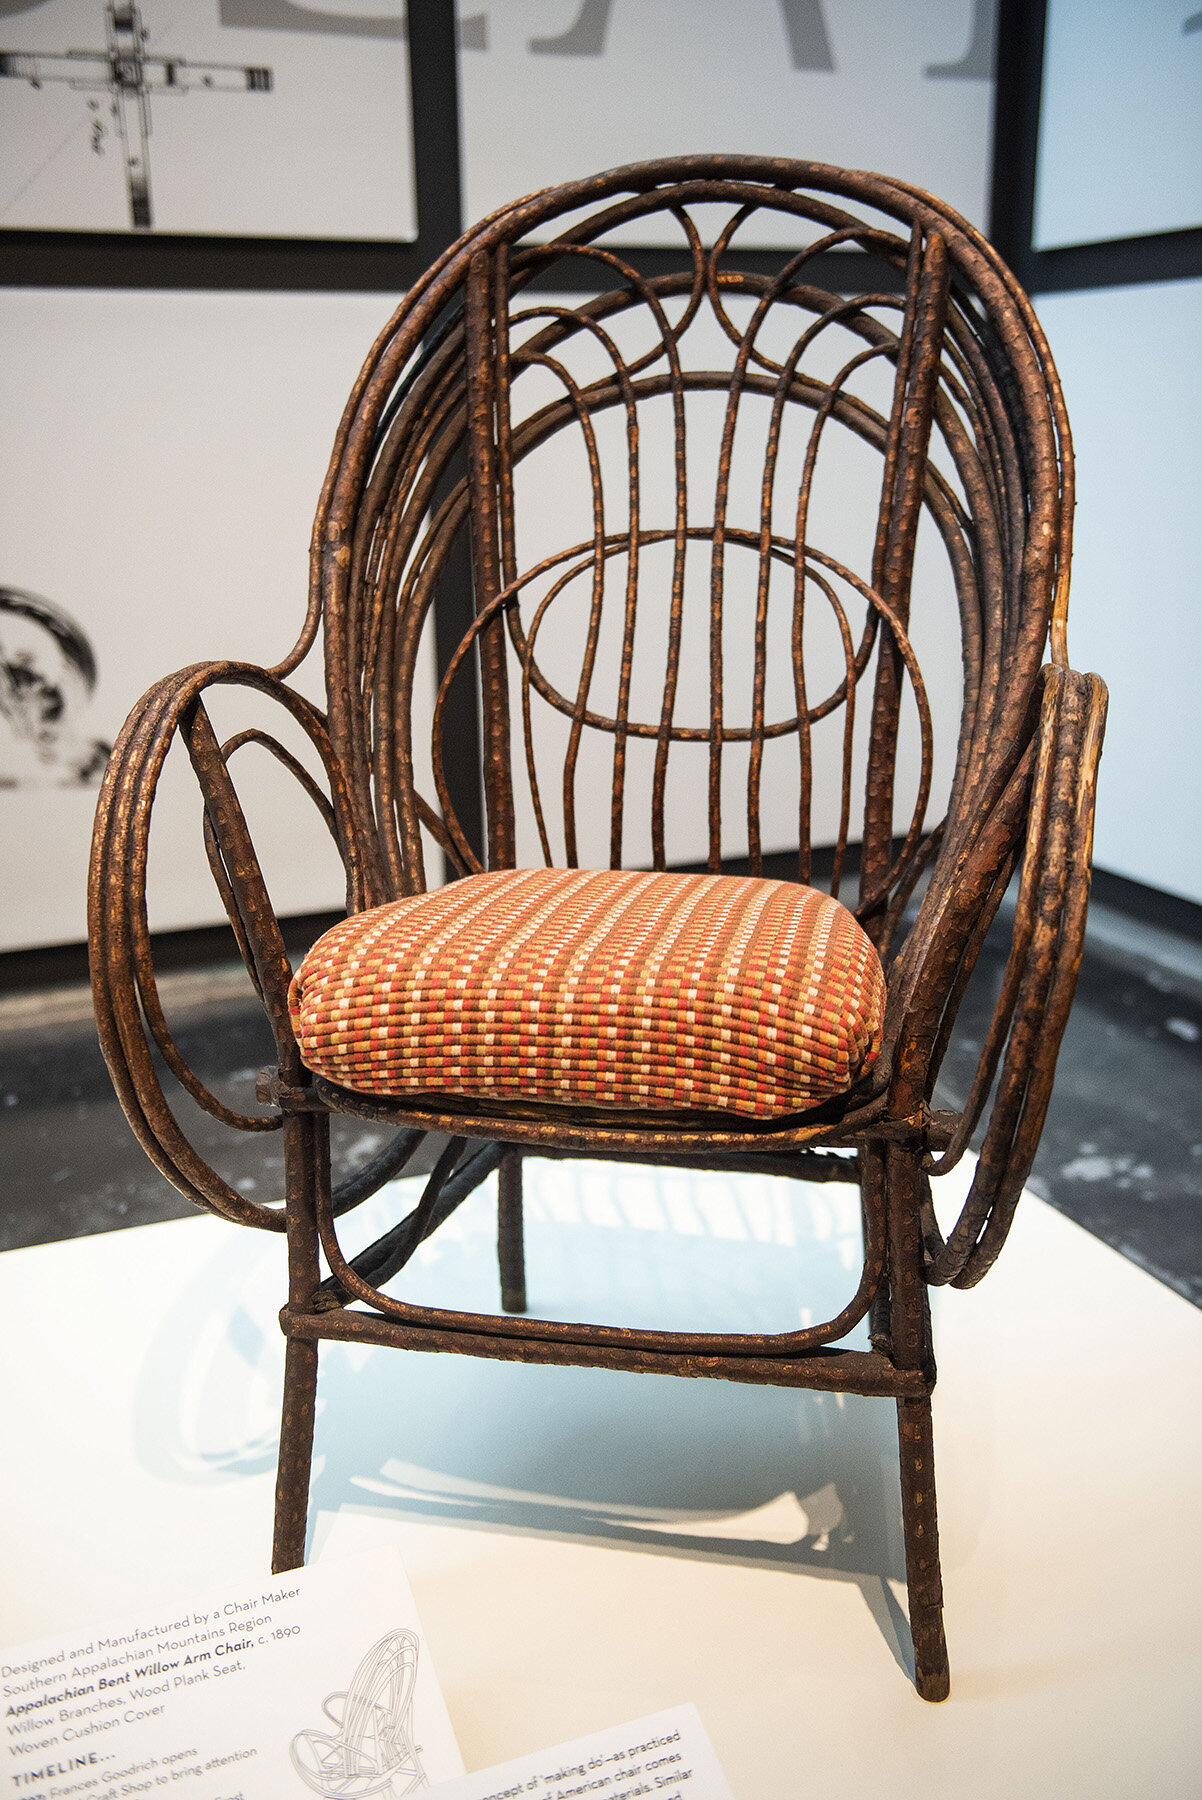   Appalachian Bent Willow Arm Chair,  Southern Appalachian Mountains Region (c. 1890),  